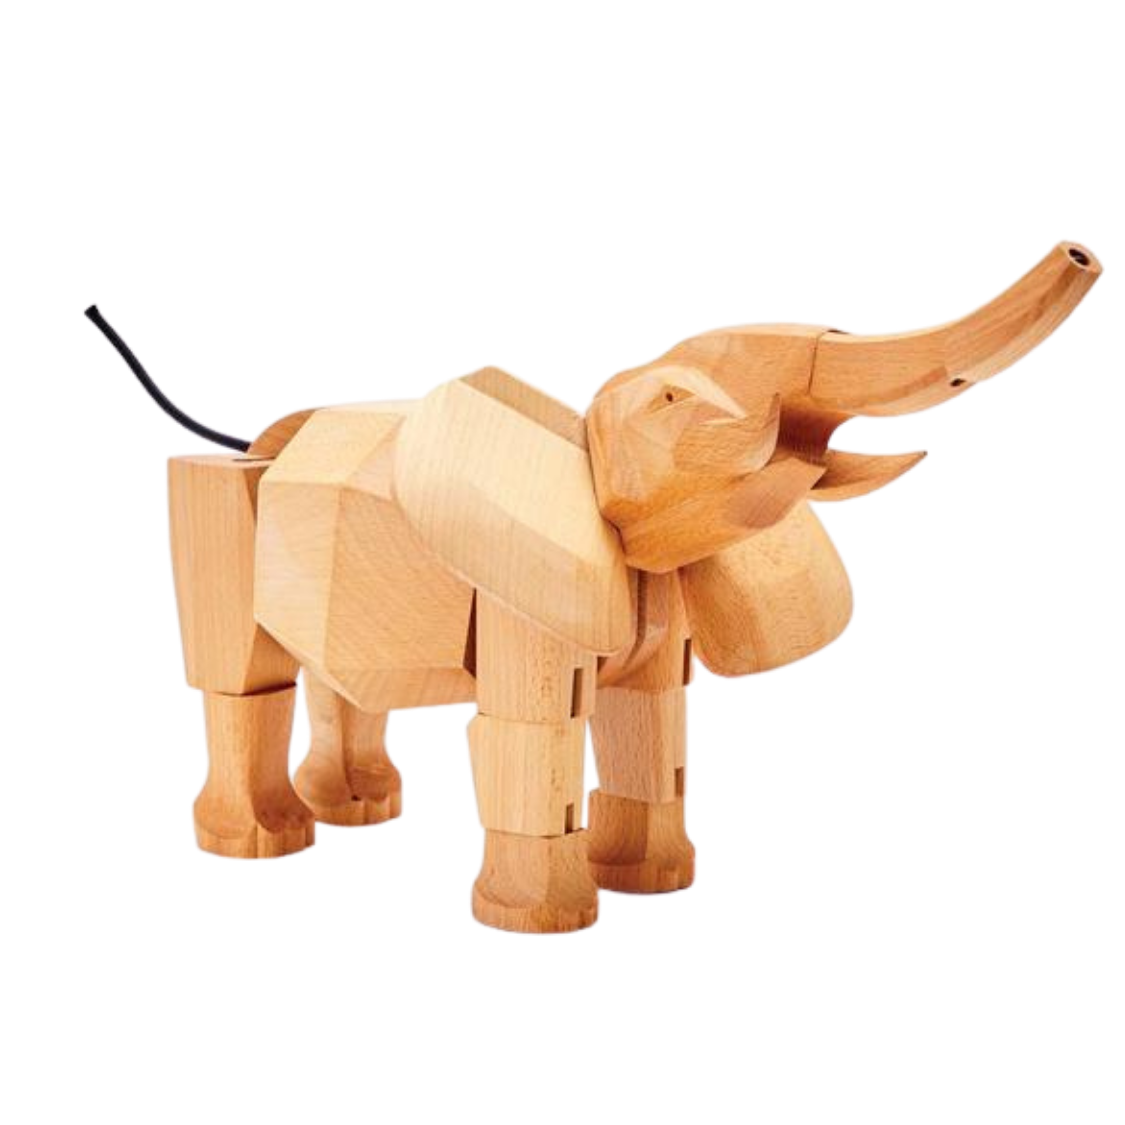 Hattie the Wooden Elephant